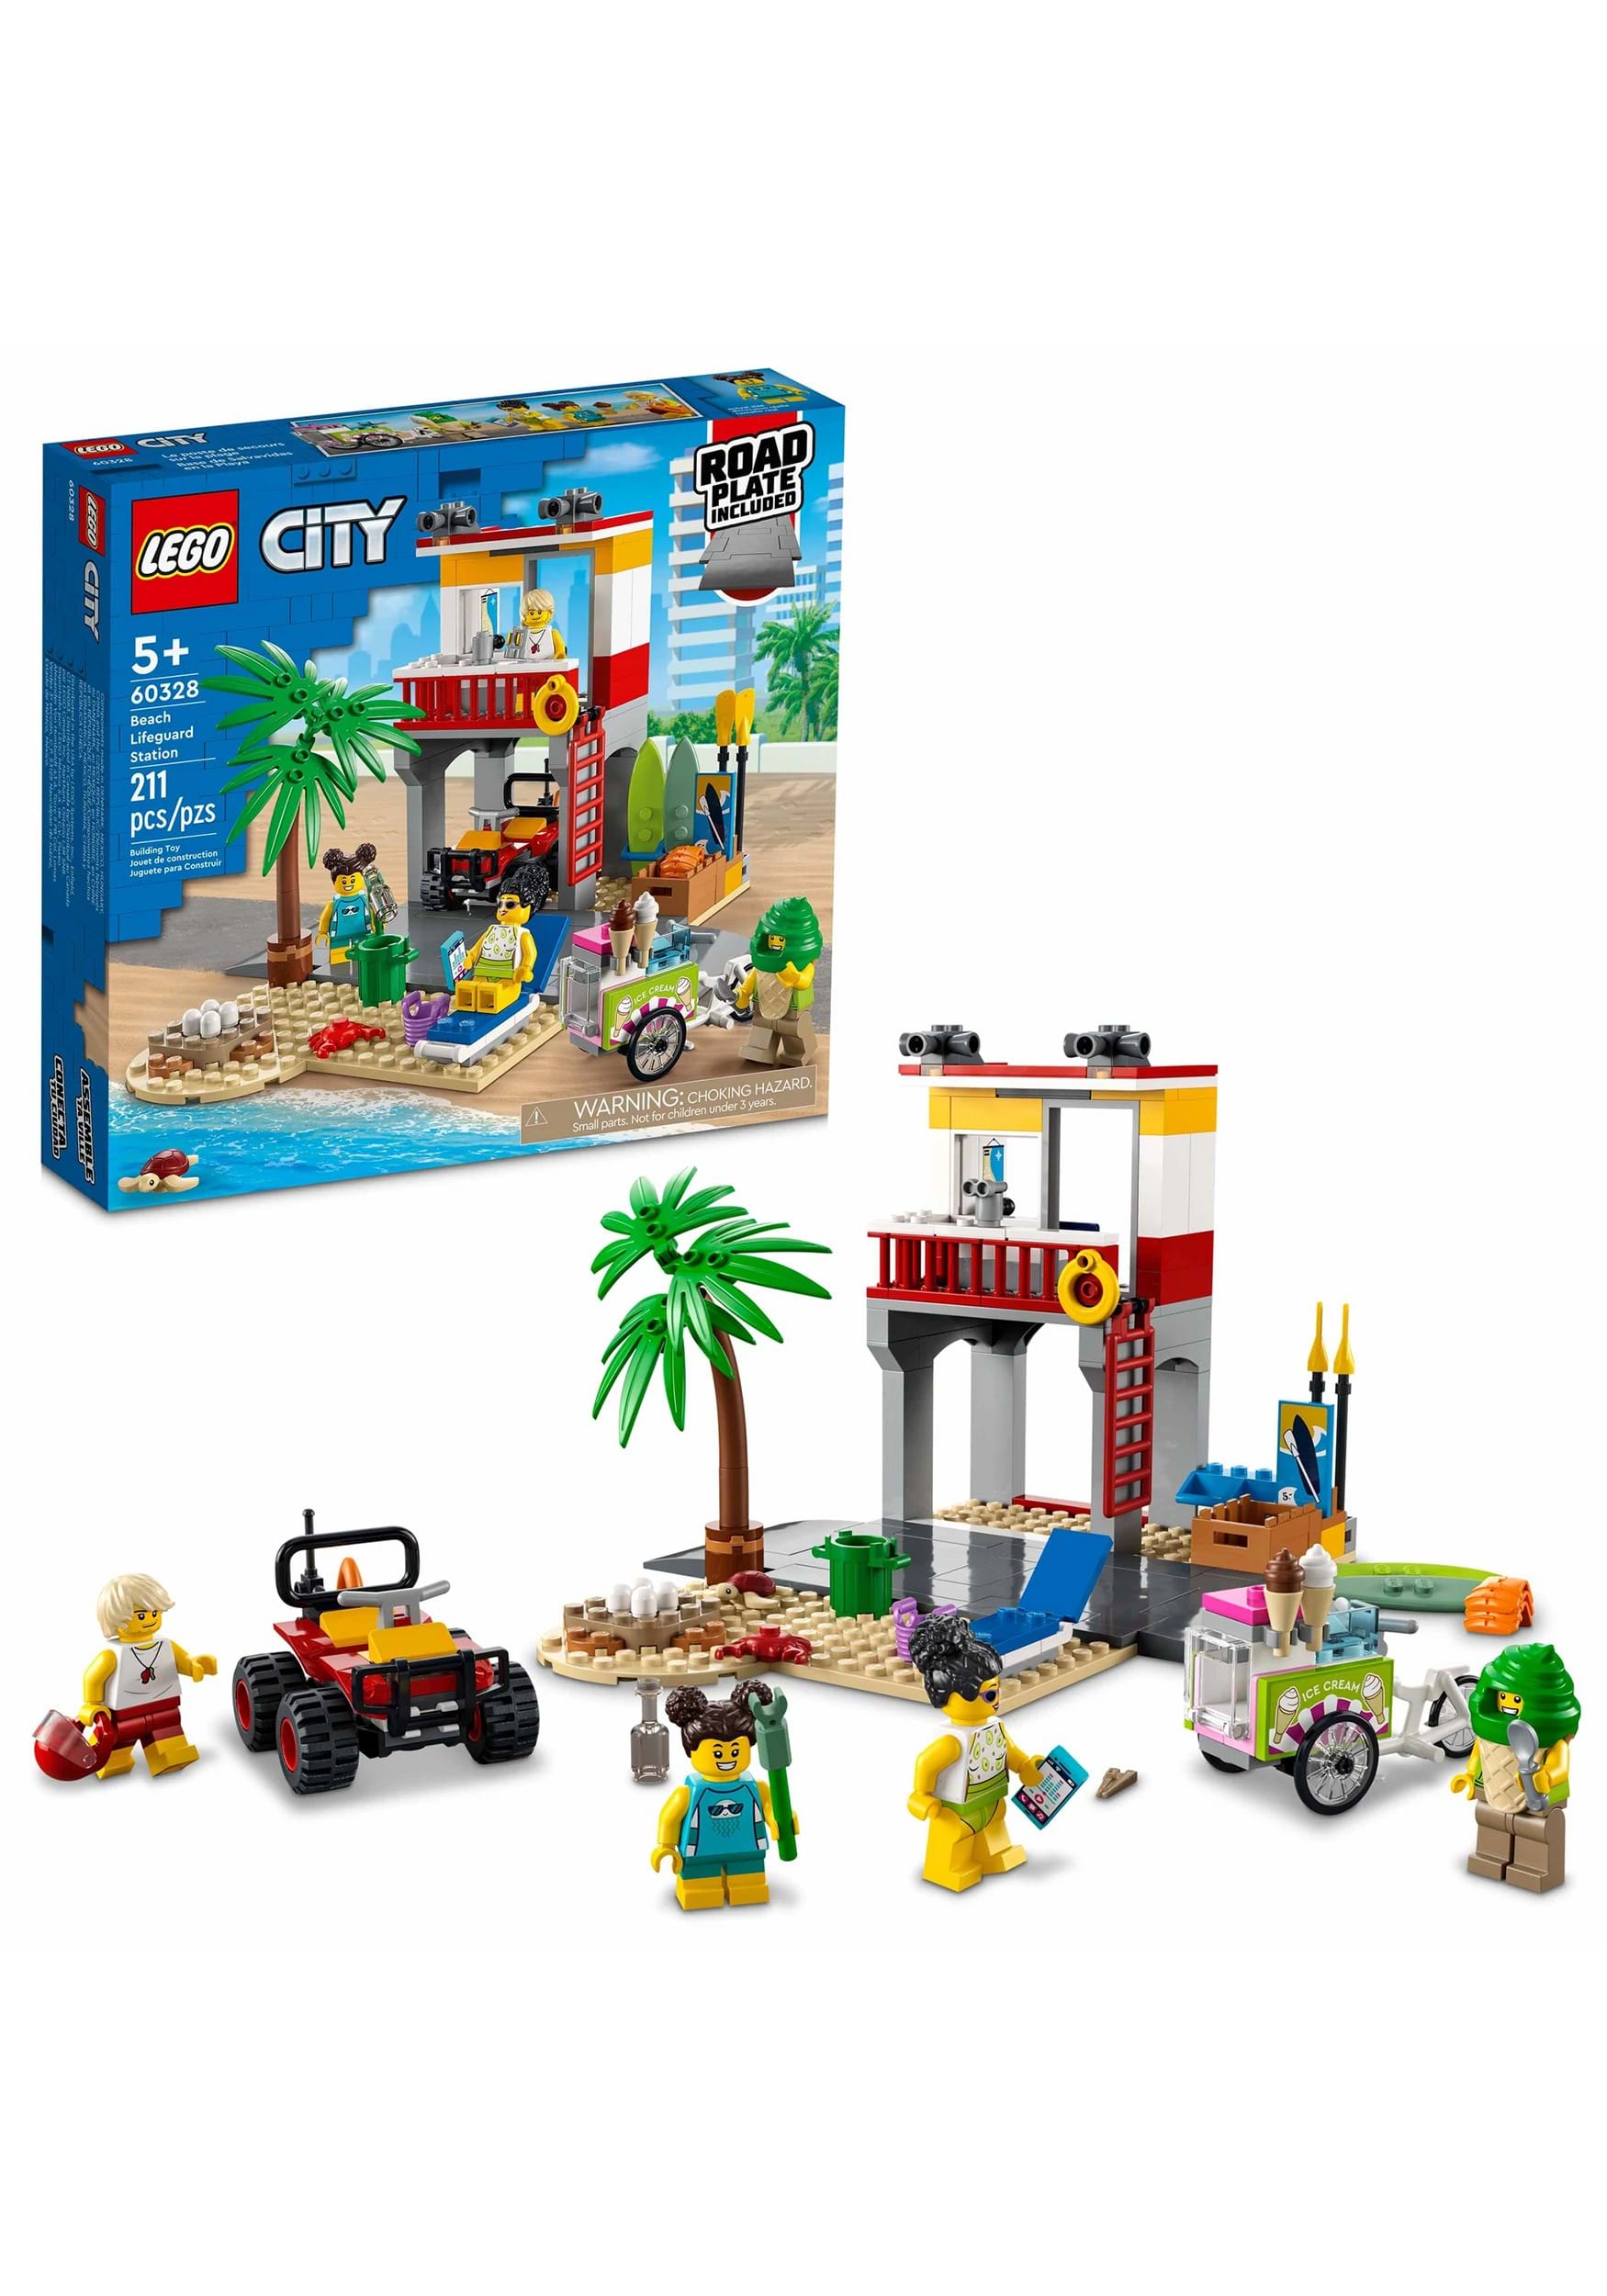 LEGO City Beach Lifeguard Station Building Kit